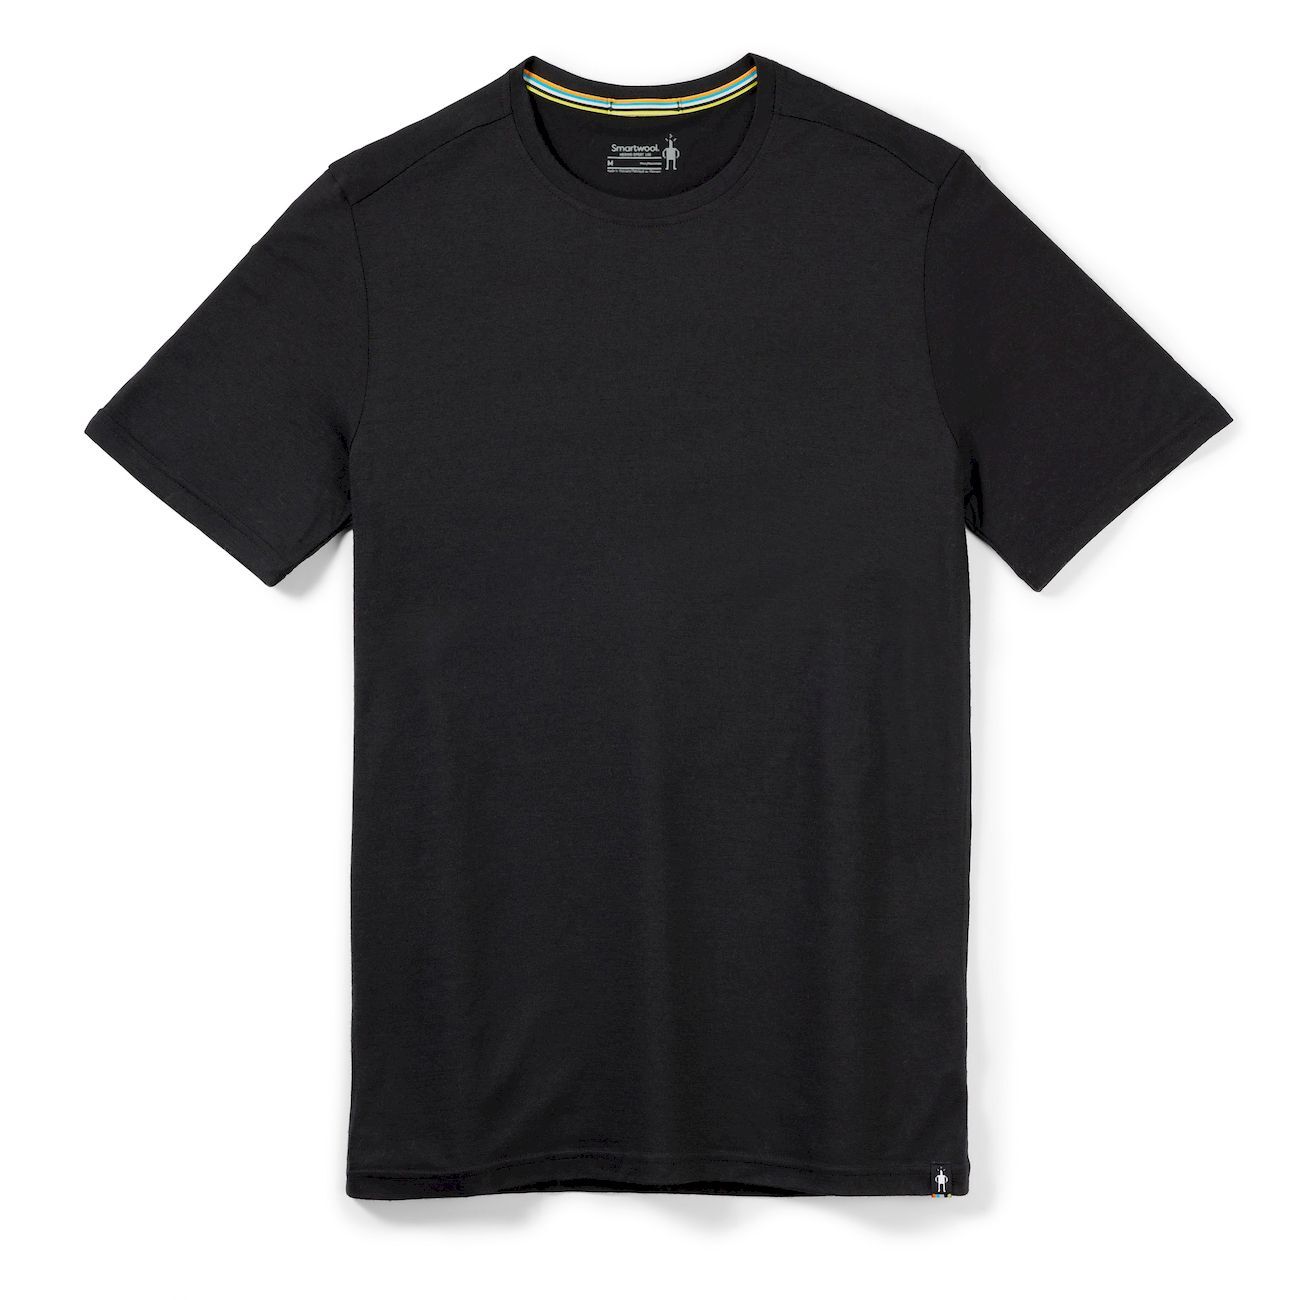 Smartwool Merino Sport 150 Tee Slim Fit - T-shirt - Men's